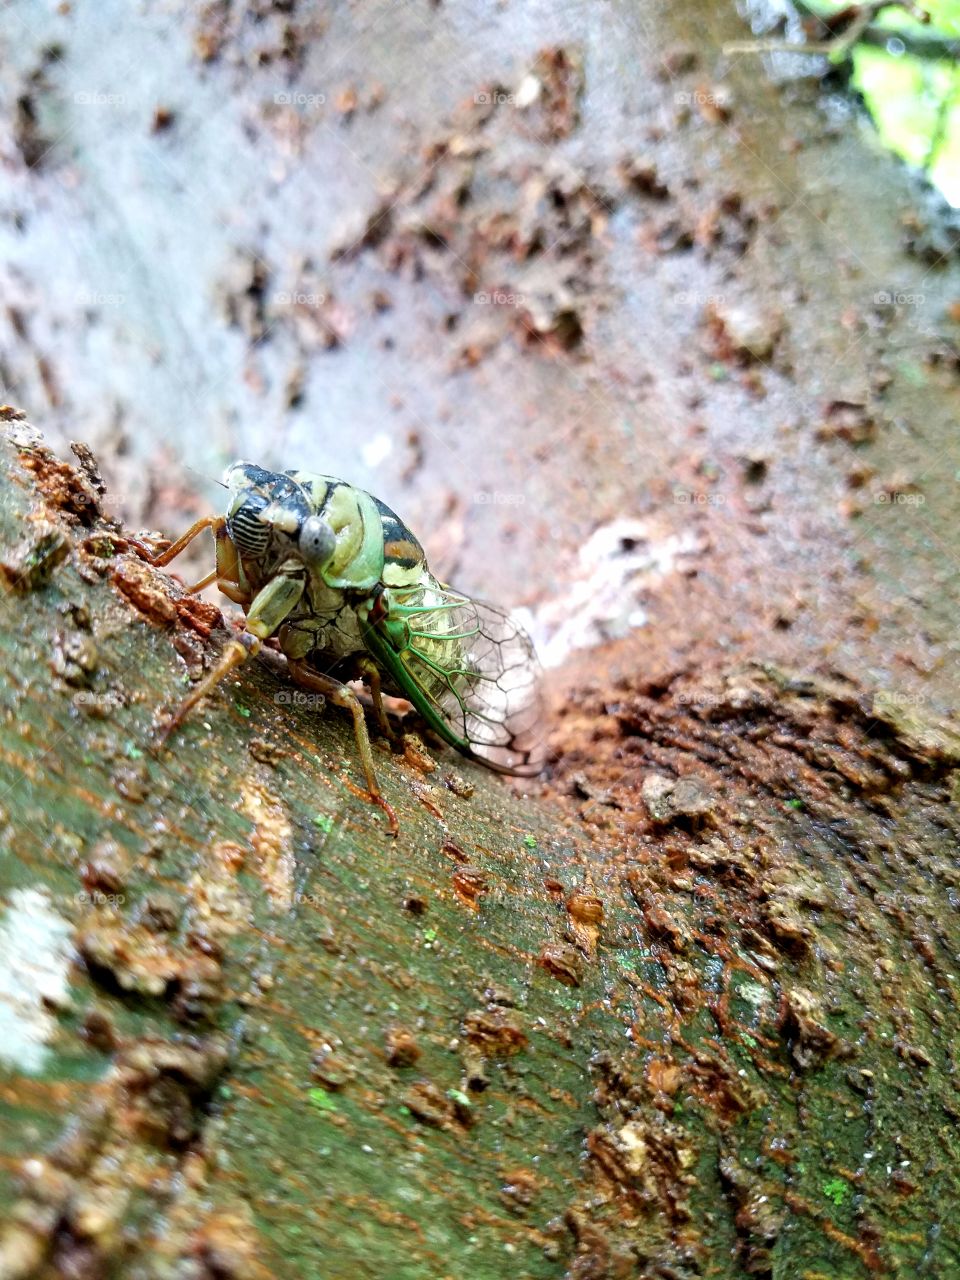 Frontal view of my dear Cicada Friend